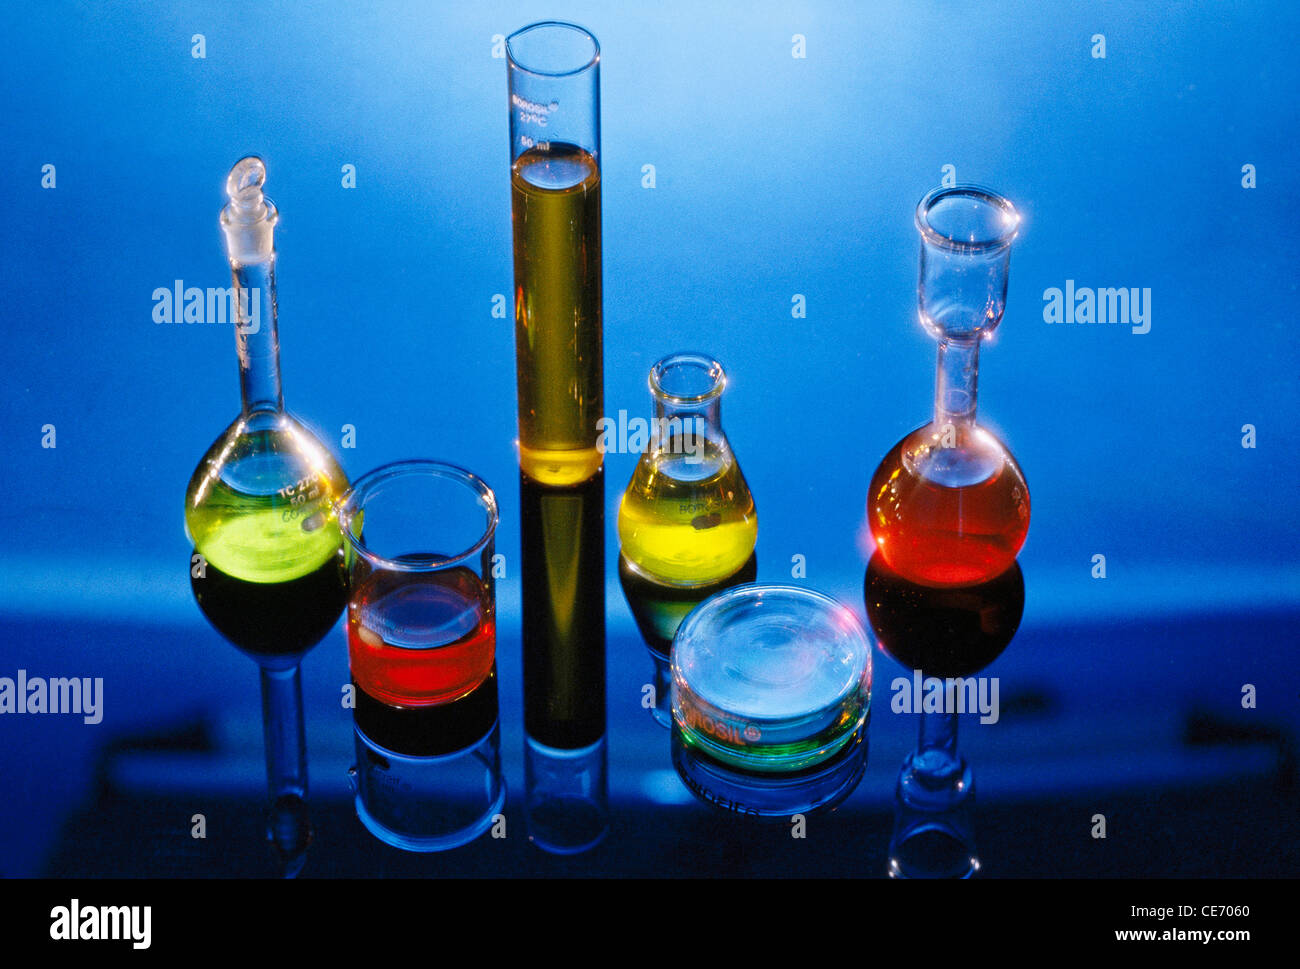 AAD 83970: Chemie Chemikalien rote gelbe Gläser blau Hintergrund Stockfoto